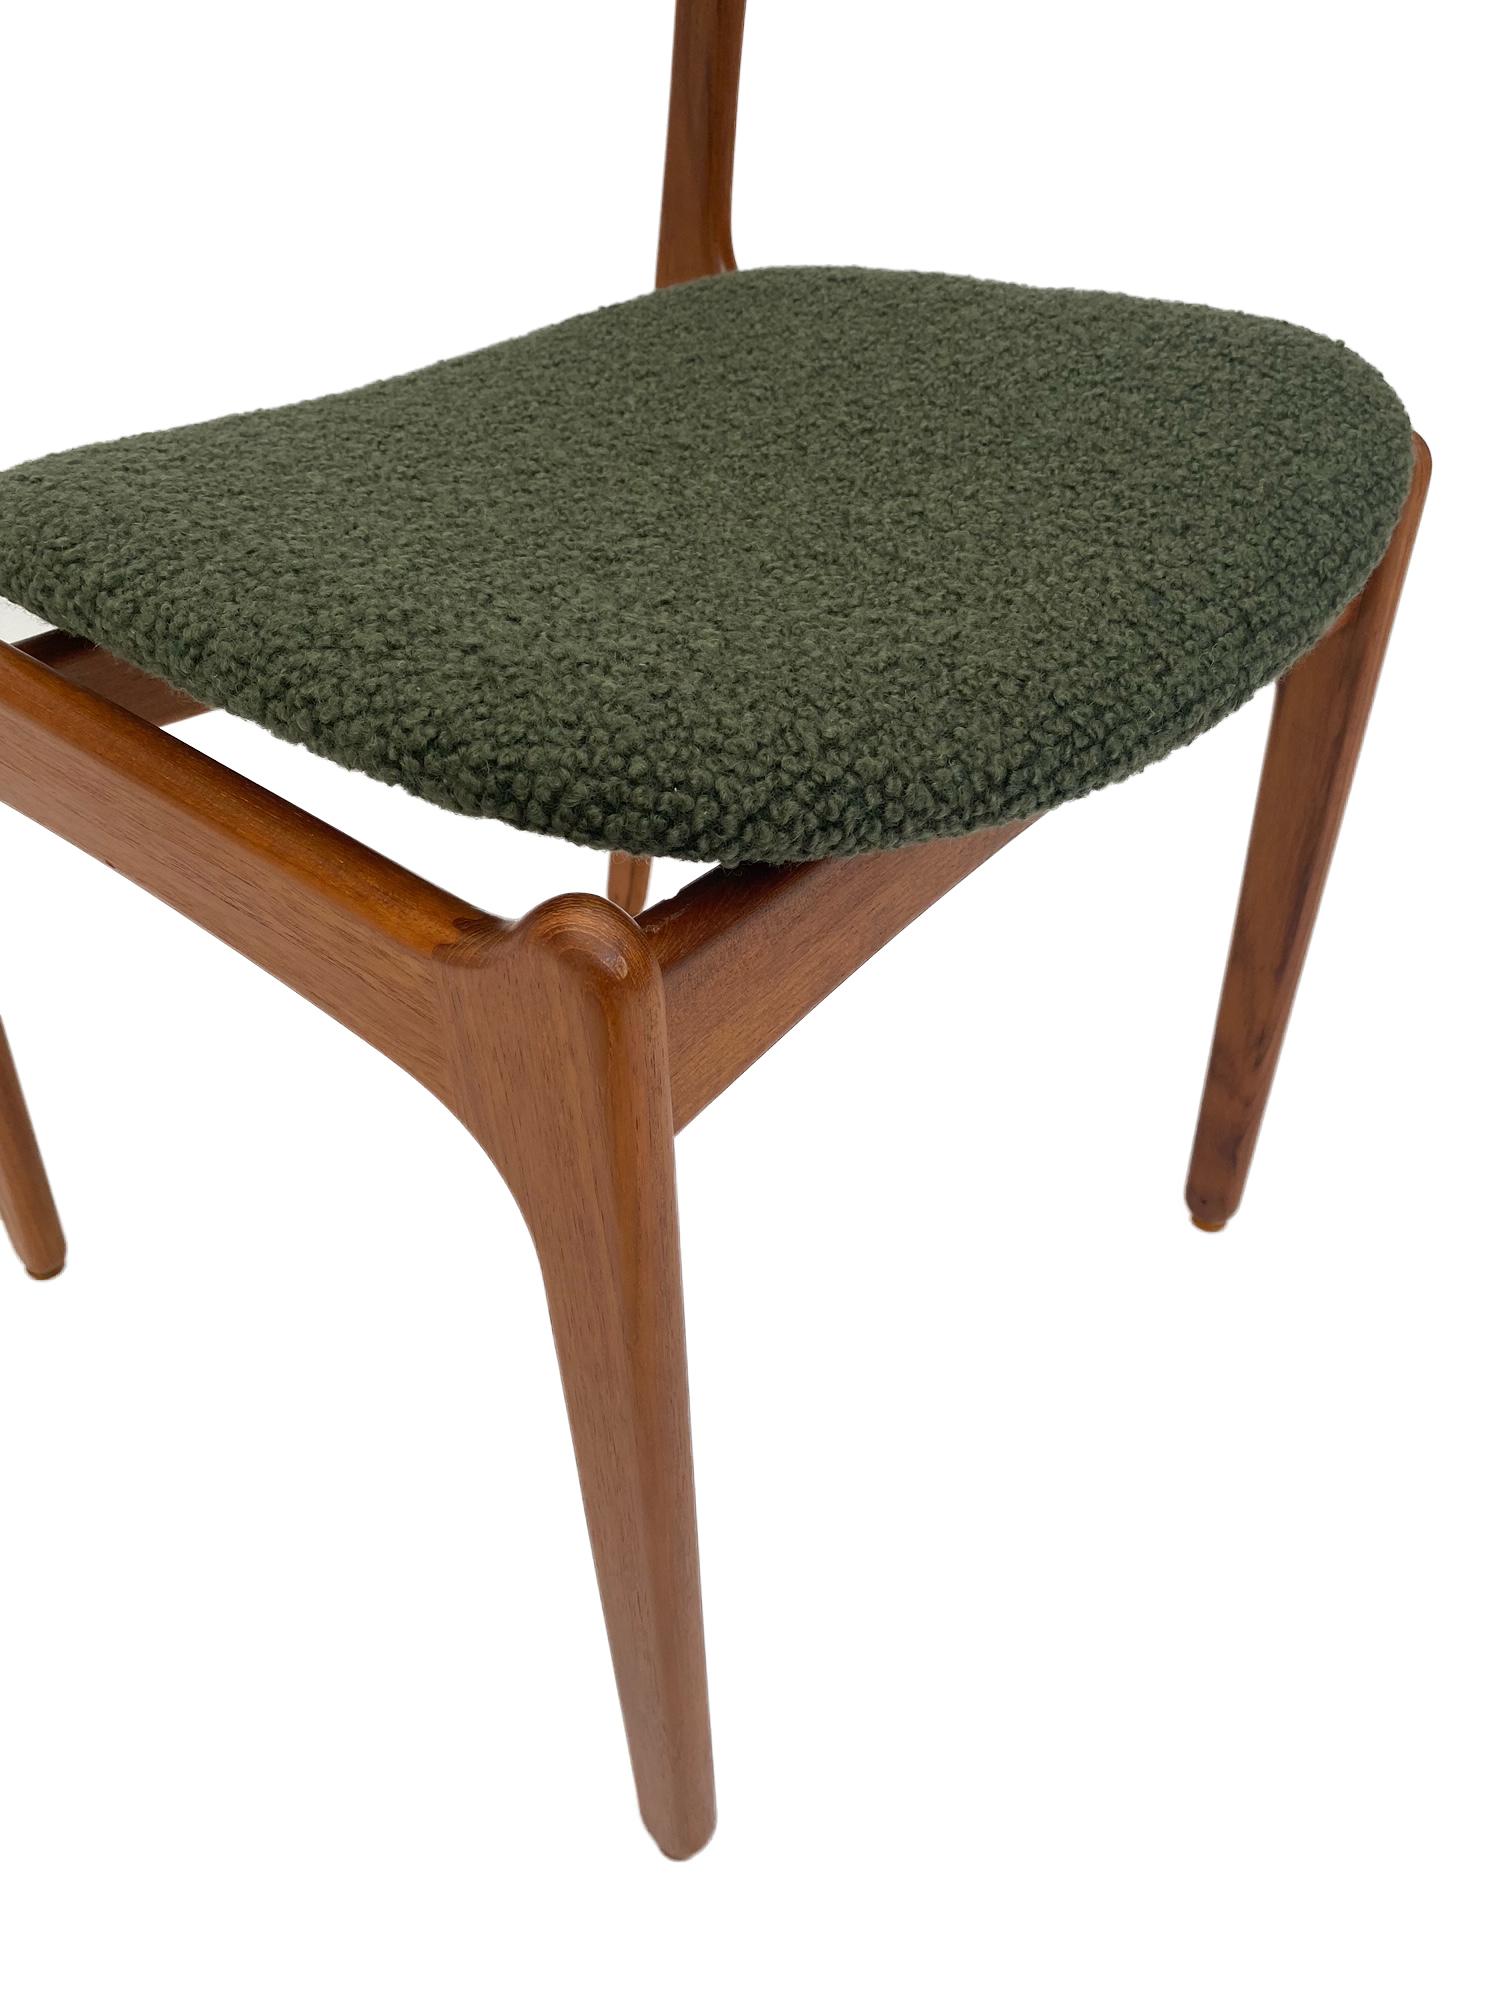 Erik Buch Model 49 Teak and Green Boucle Desk Chair. Denmark, 1960s 5